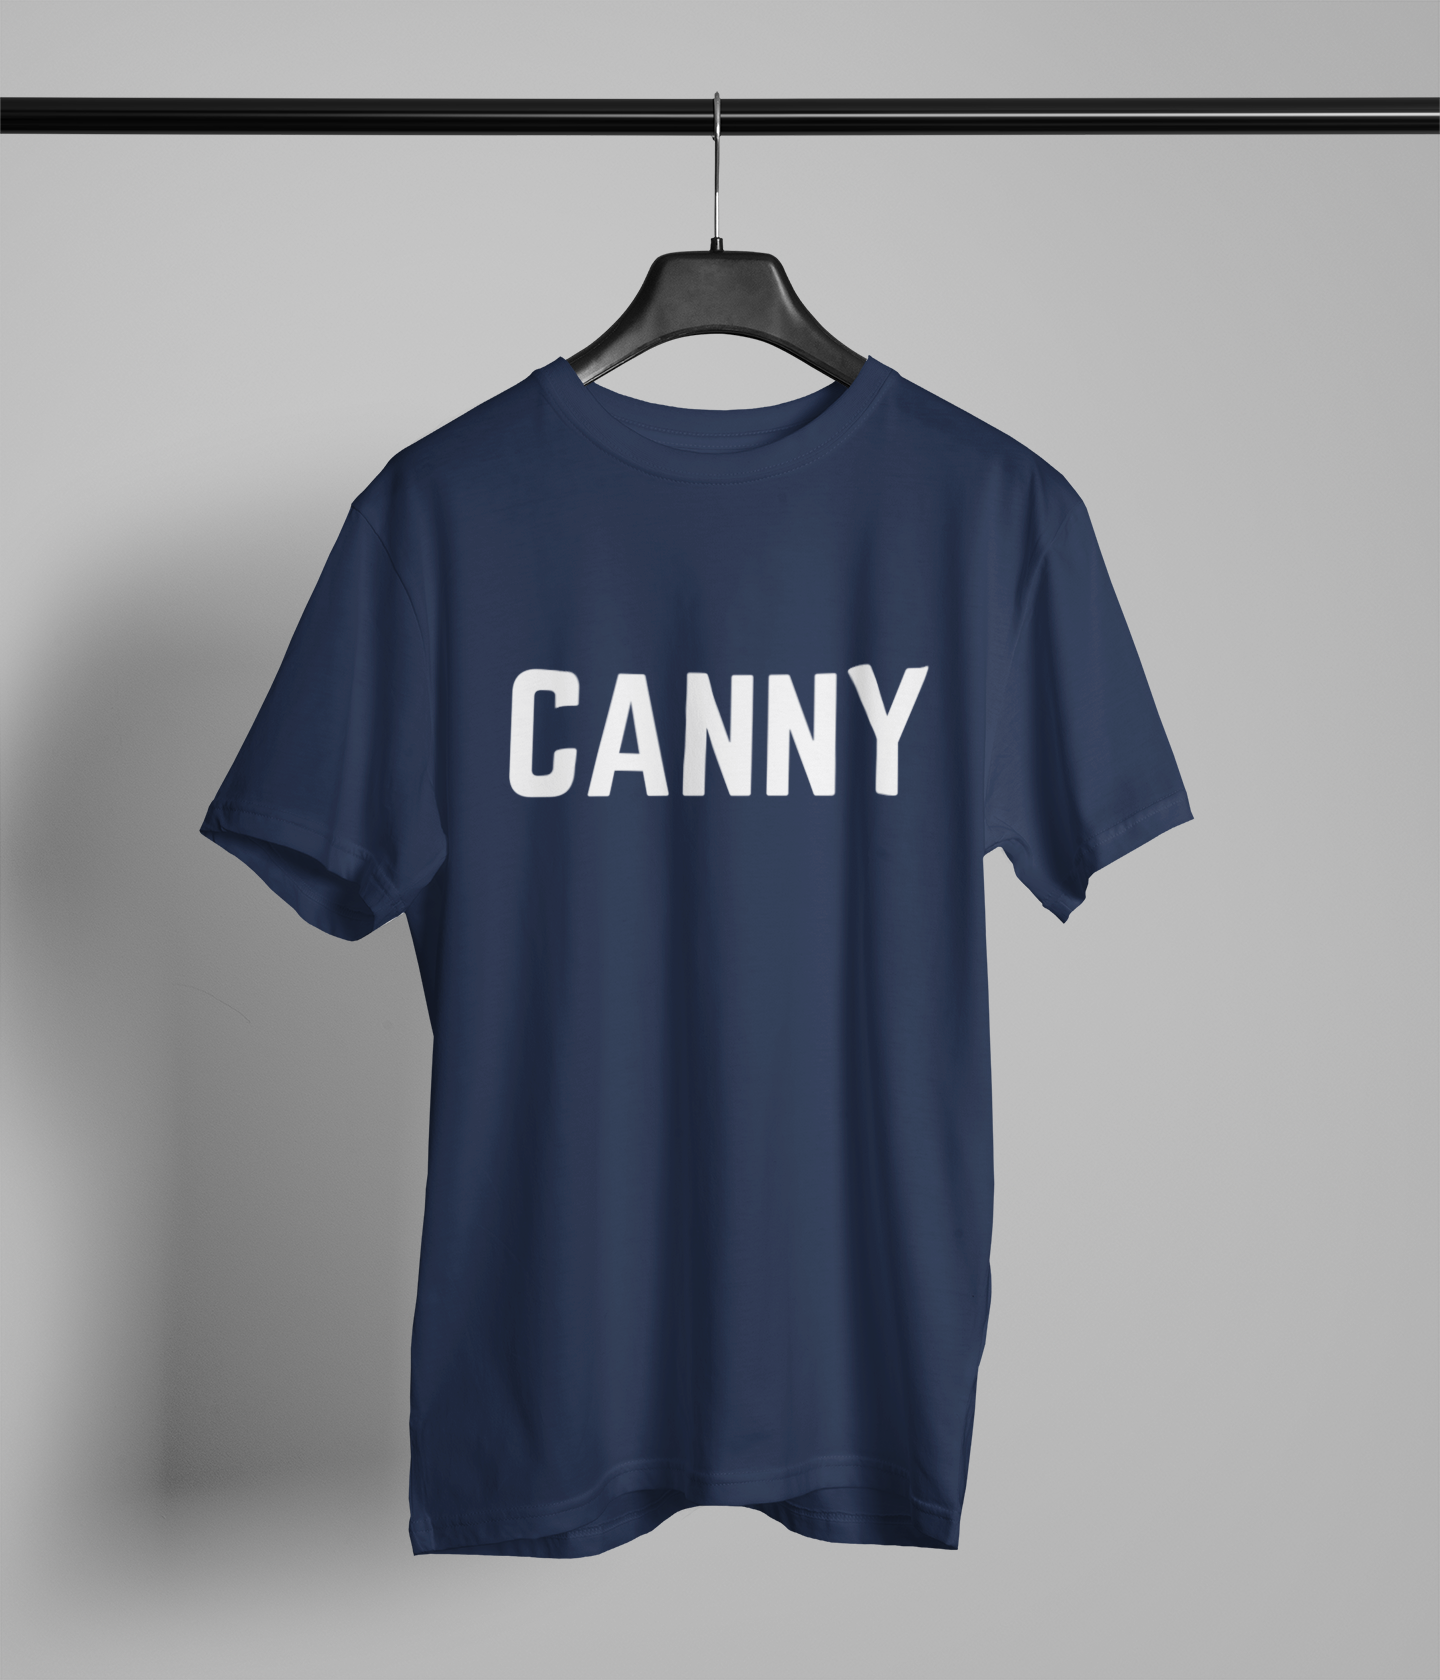 CANNY Northern Slang T-Shirt Unisex